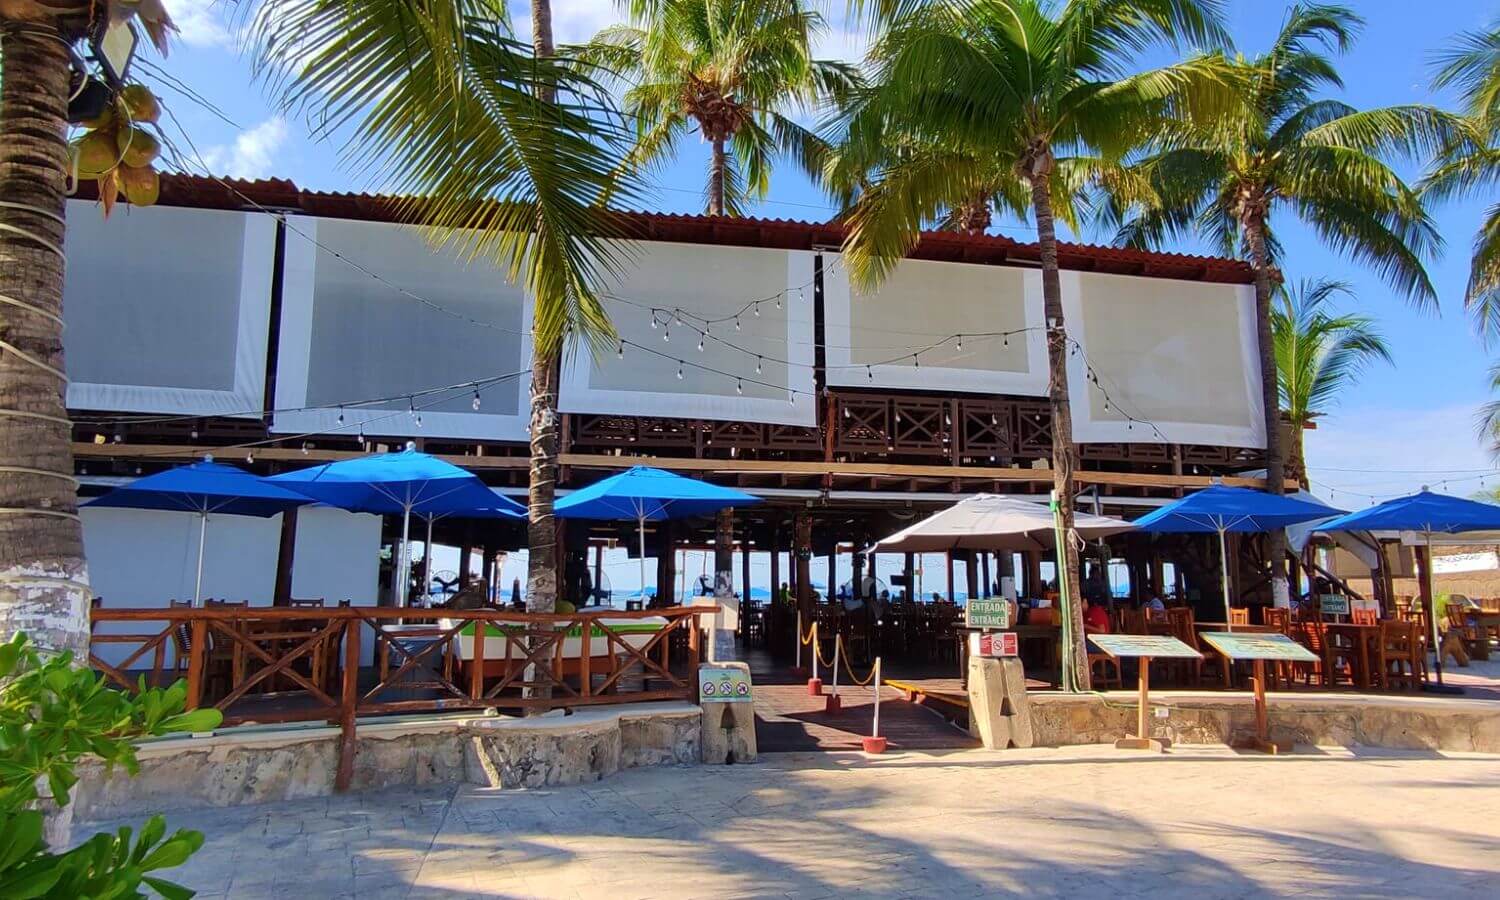 Coco Beach Bar Isla Mujeres from the street